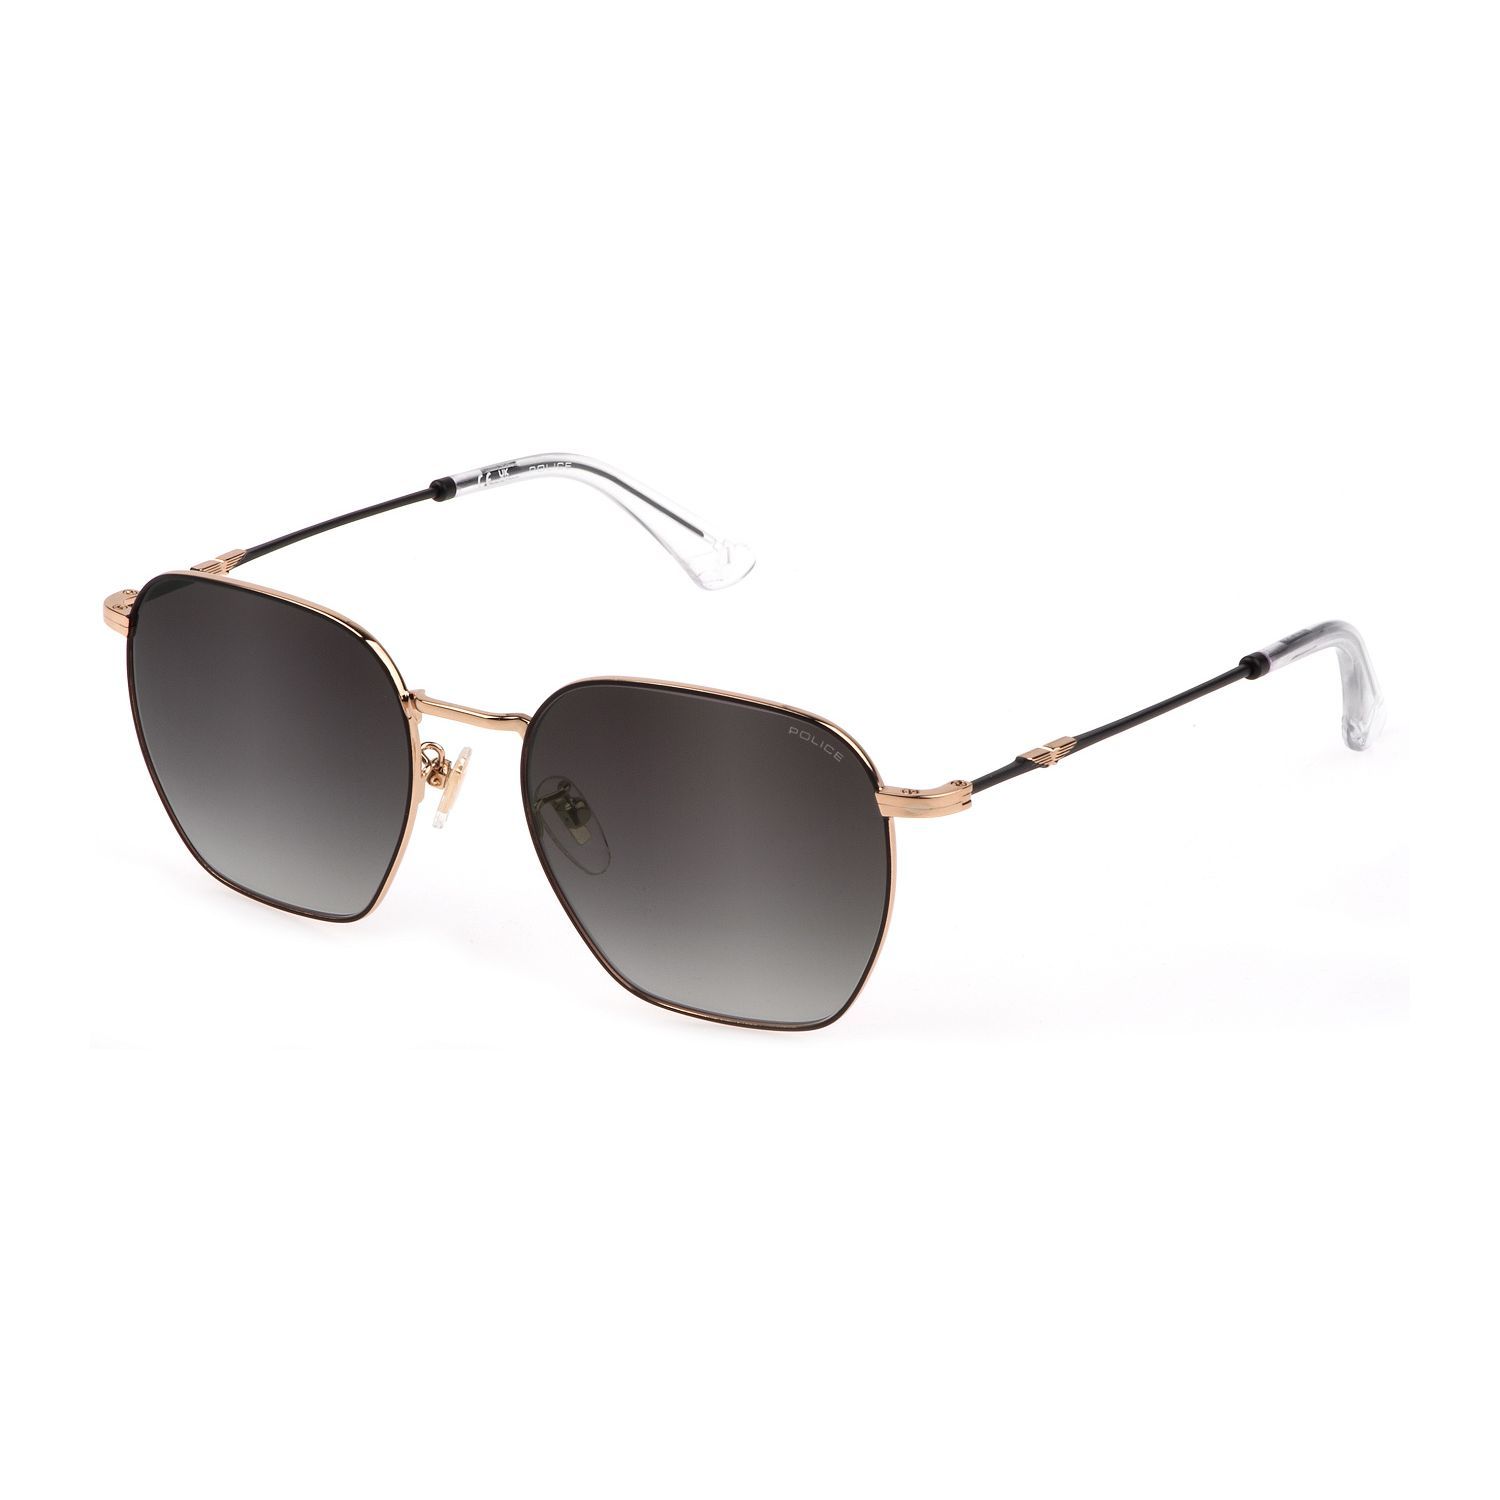 SPLL06M Square Sunglasses 302 - size 54